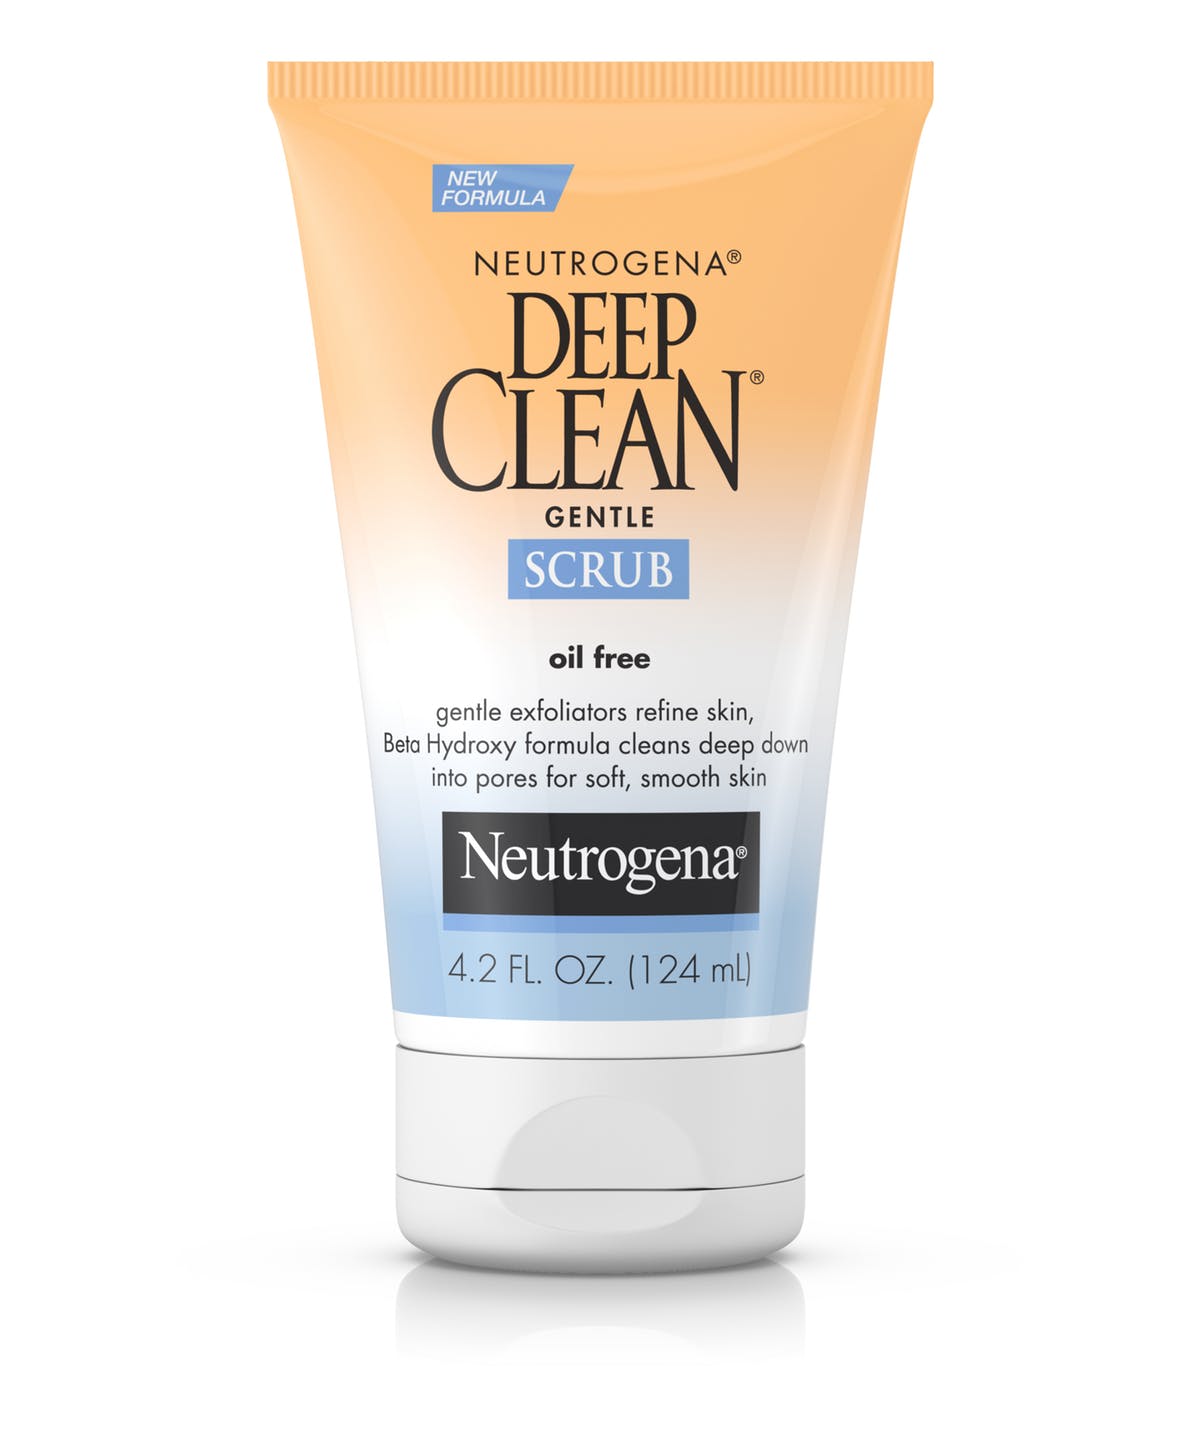 Neutrogena Deep Clean Gentle Scrub Image